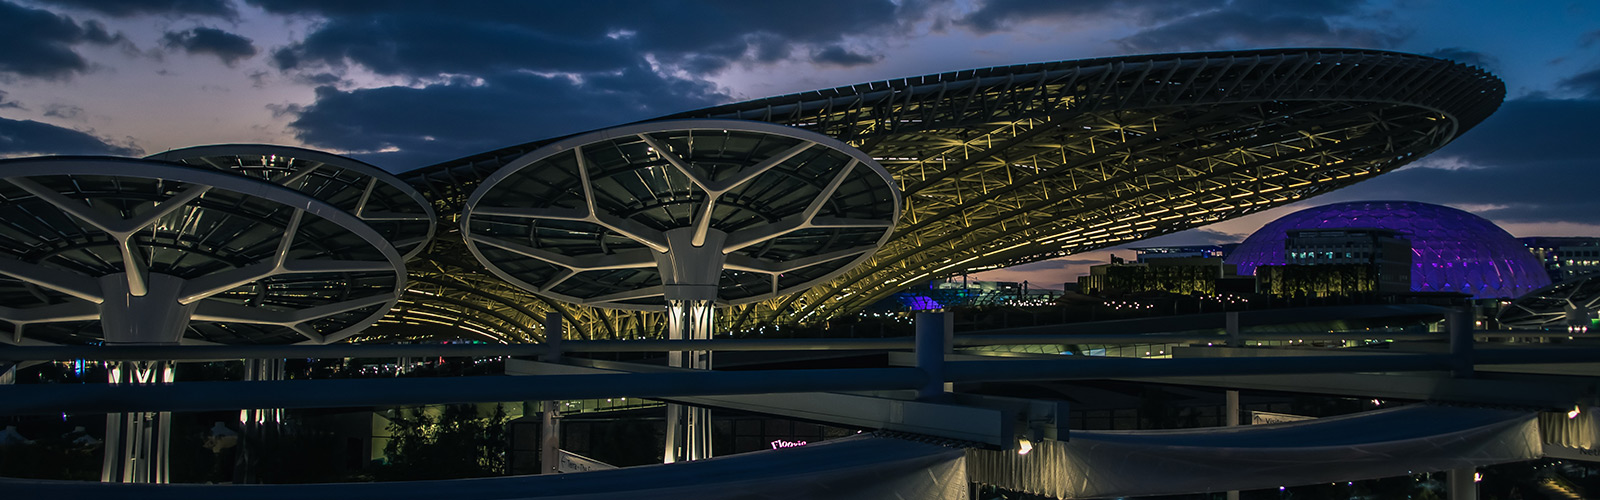 Convention Centre at Expo City Dubai at night